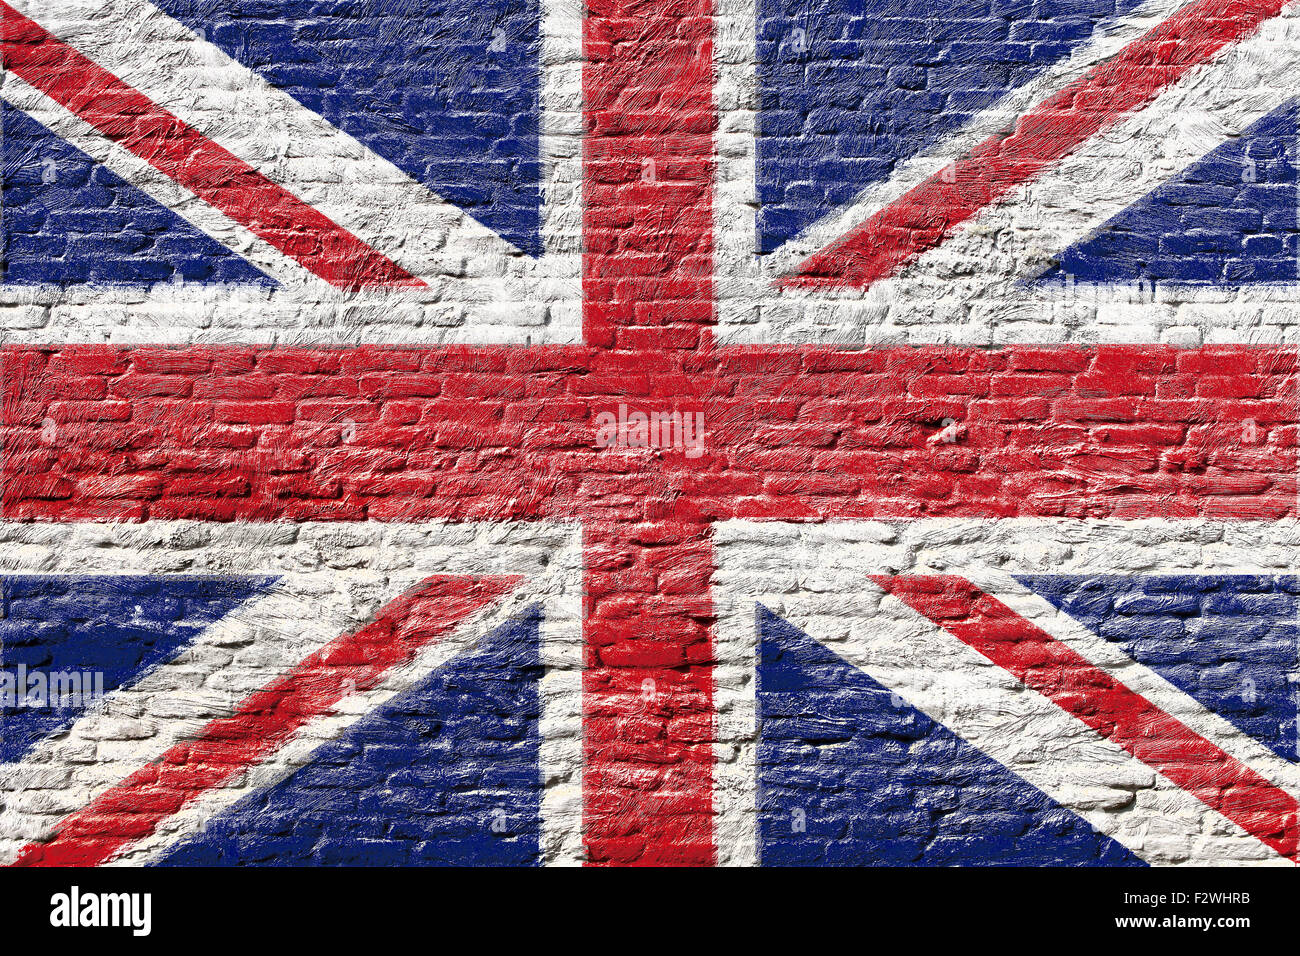 United kingdom - National flag on Brick wall Stock Photo